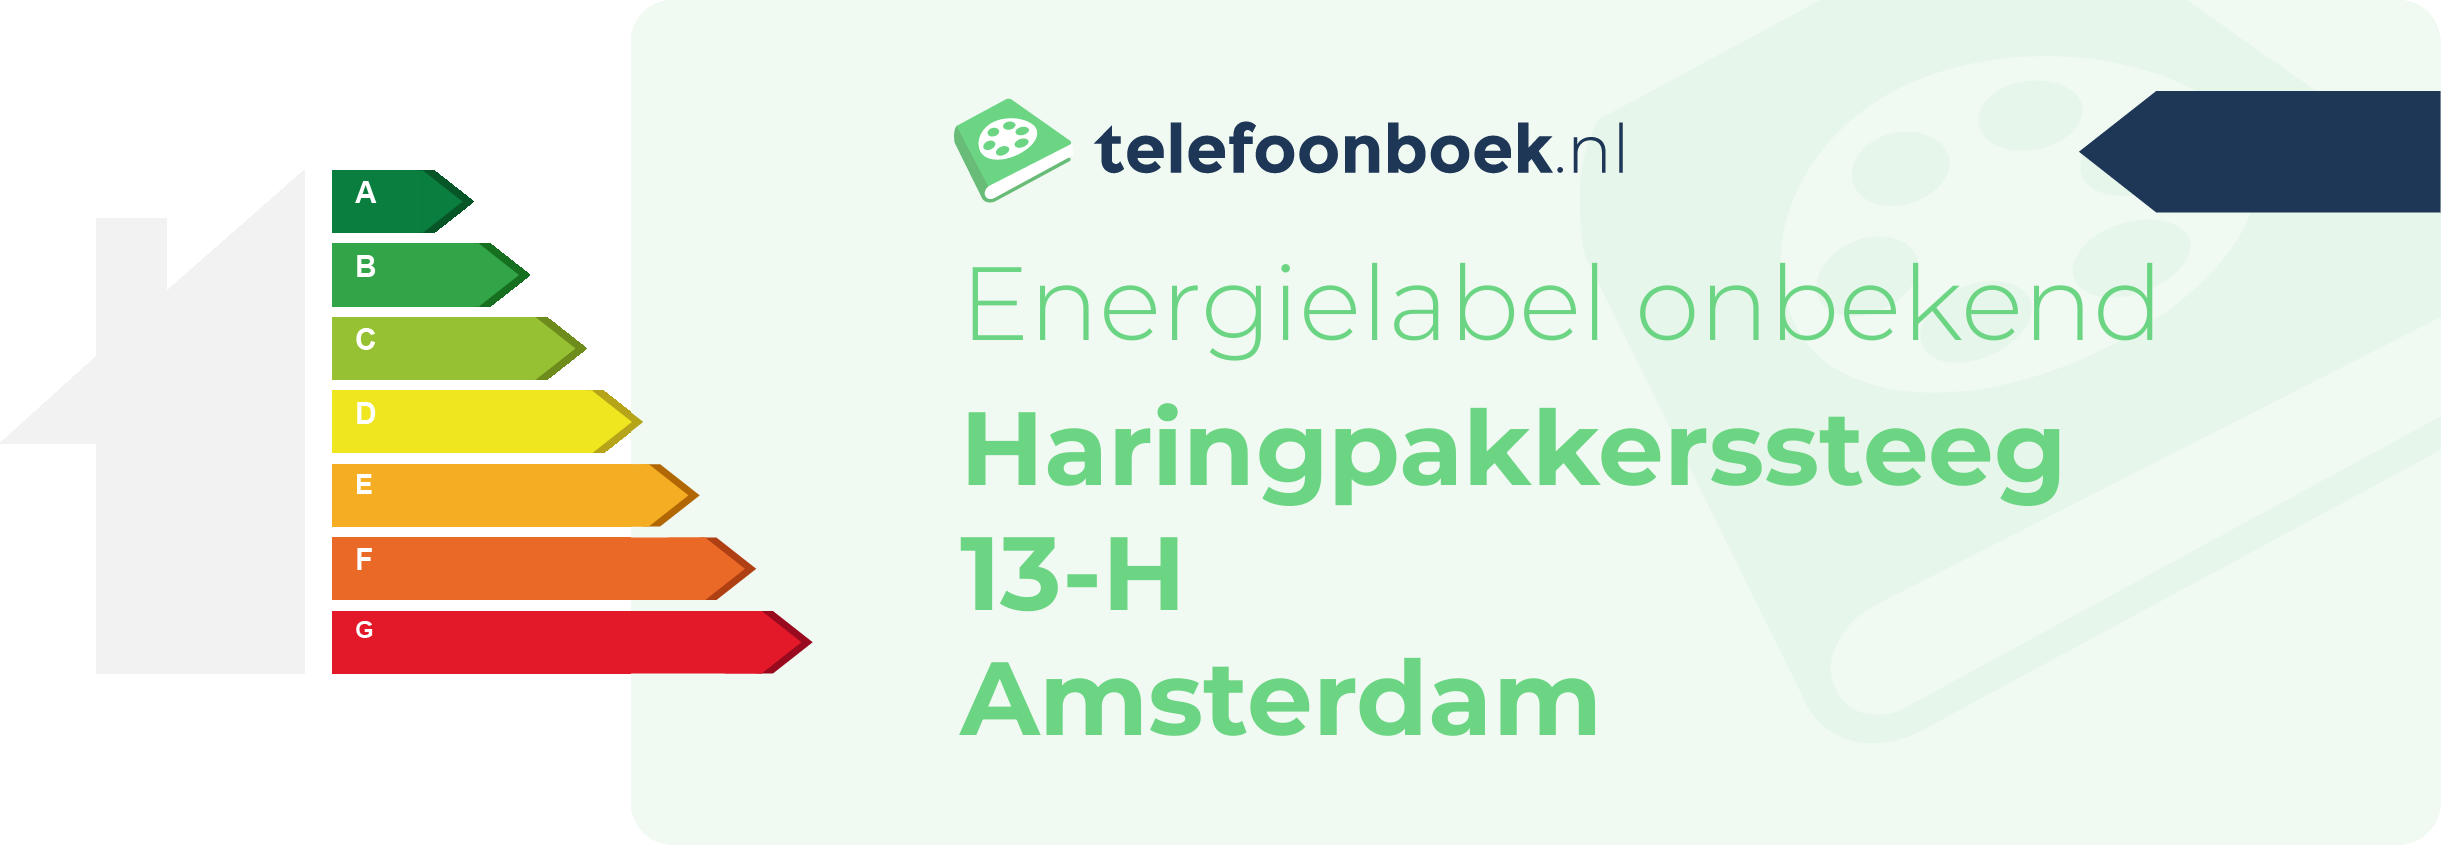 Energielabel Haringpakkerssteeg 13-H Amsterdam